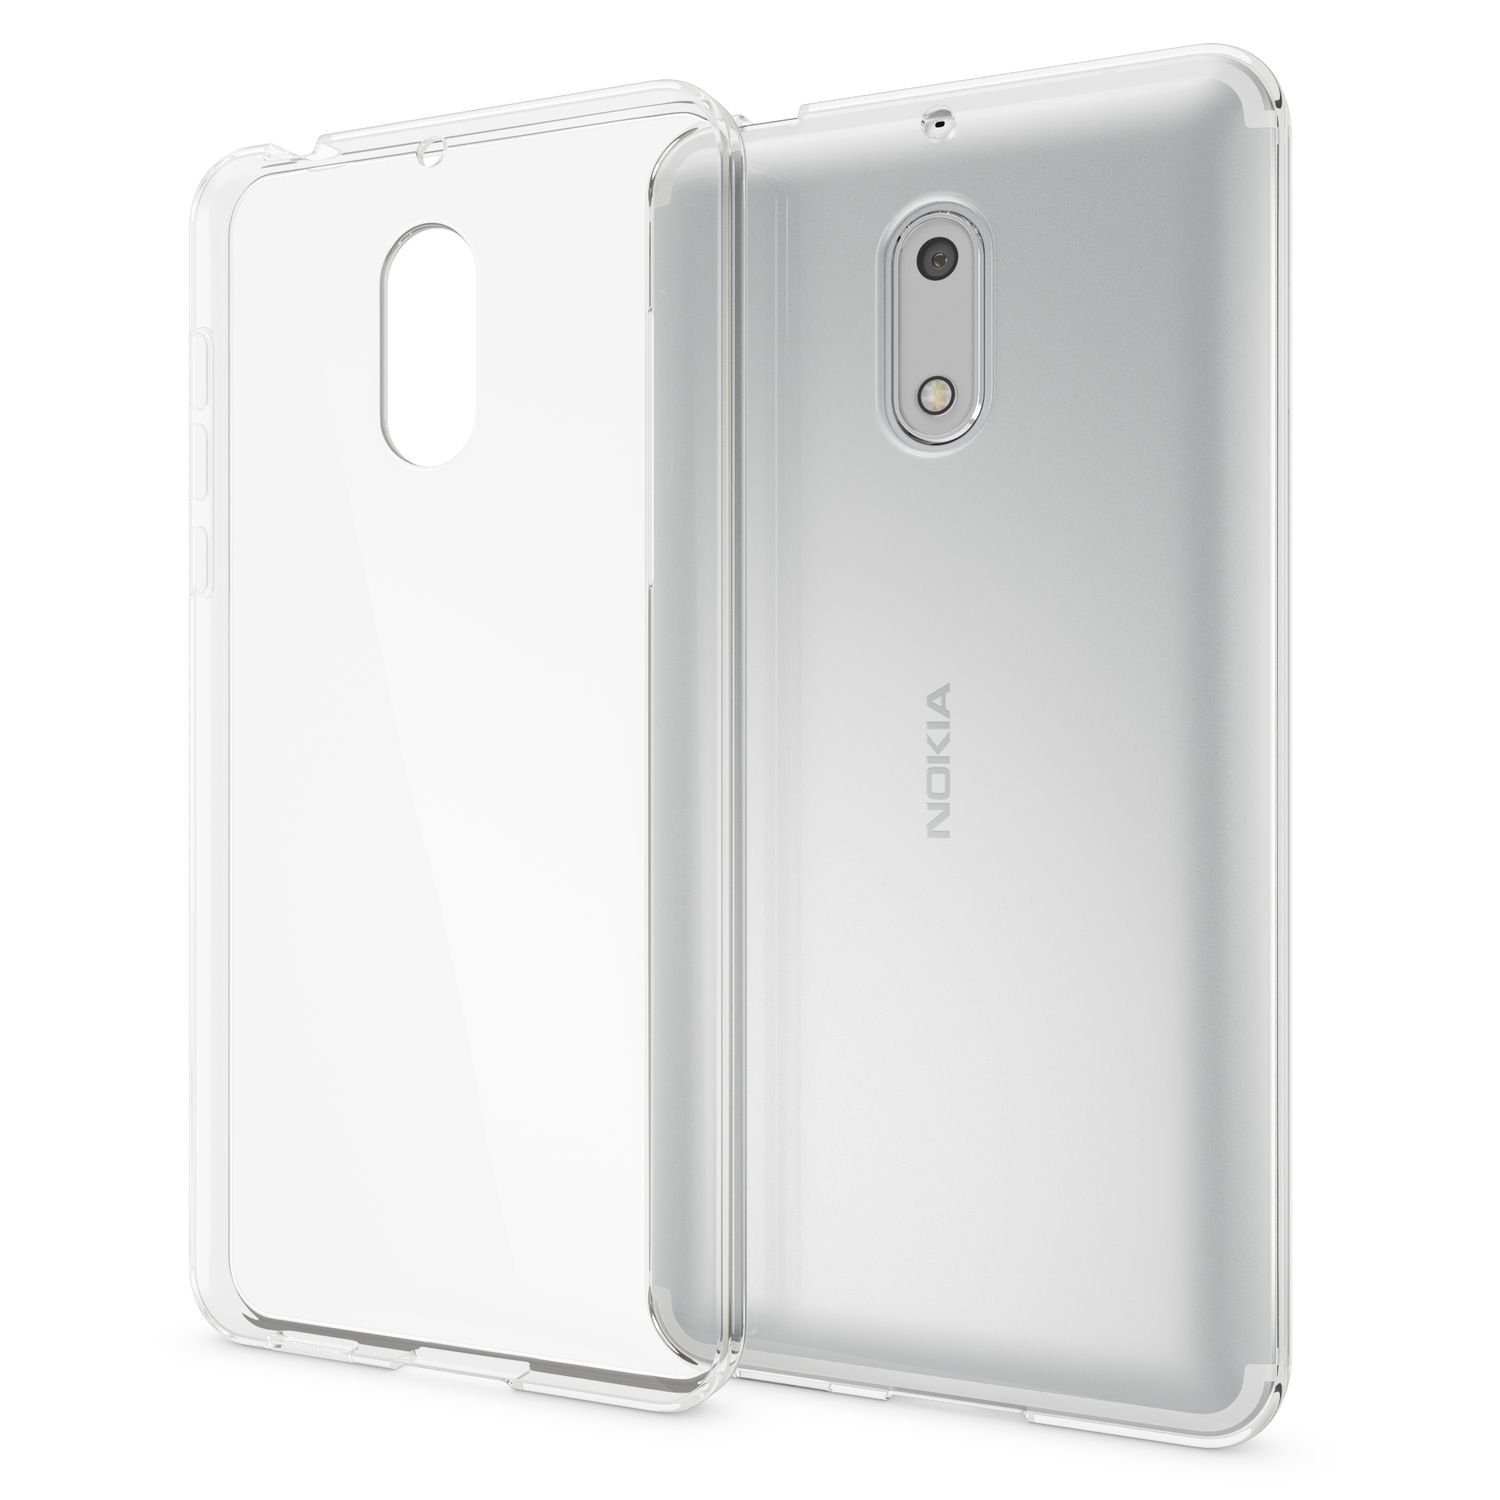 Nalia Smartphone-Hülle Nokia 6, Klare Silikon Hülle / Extrem Transparent / Durchsichtig / Anti-Gelb